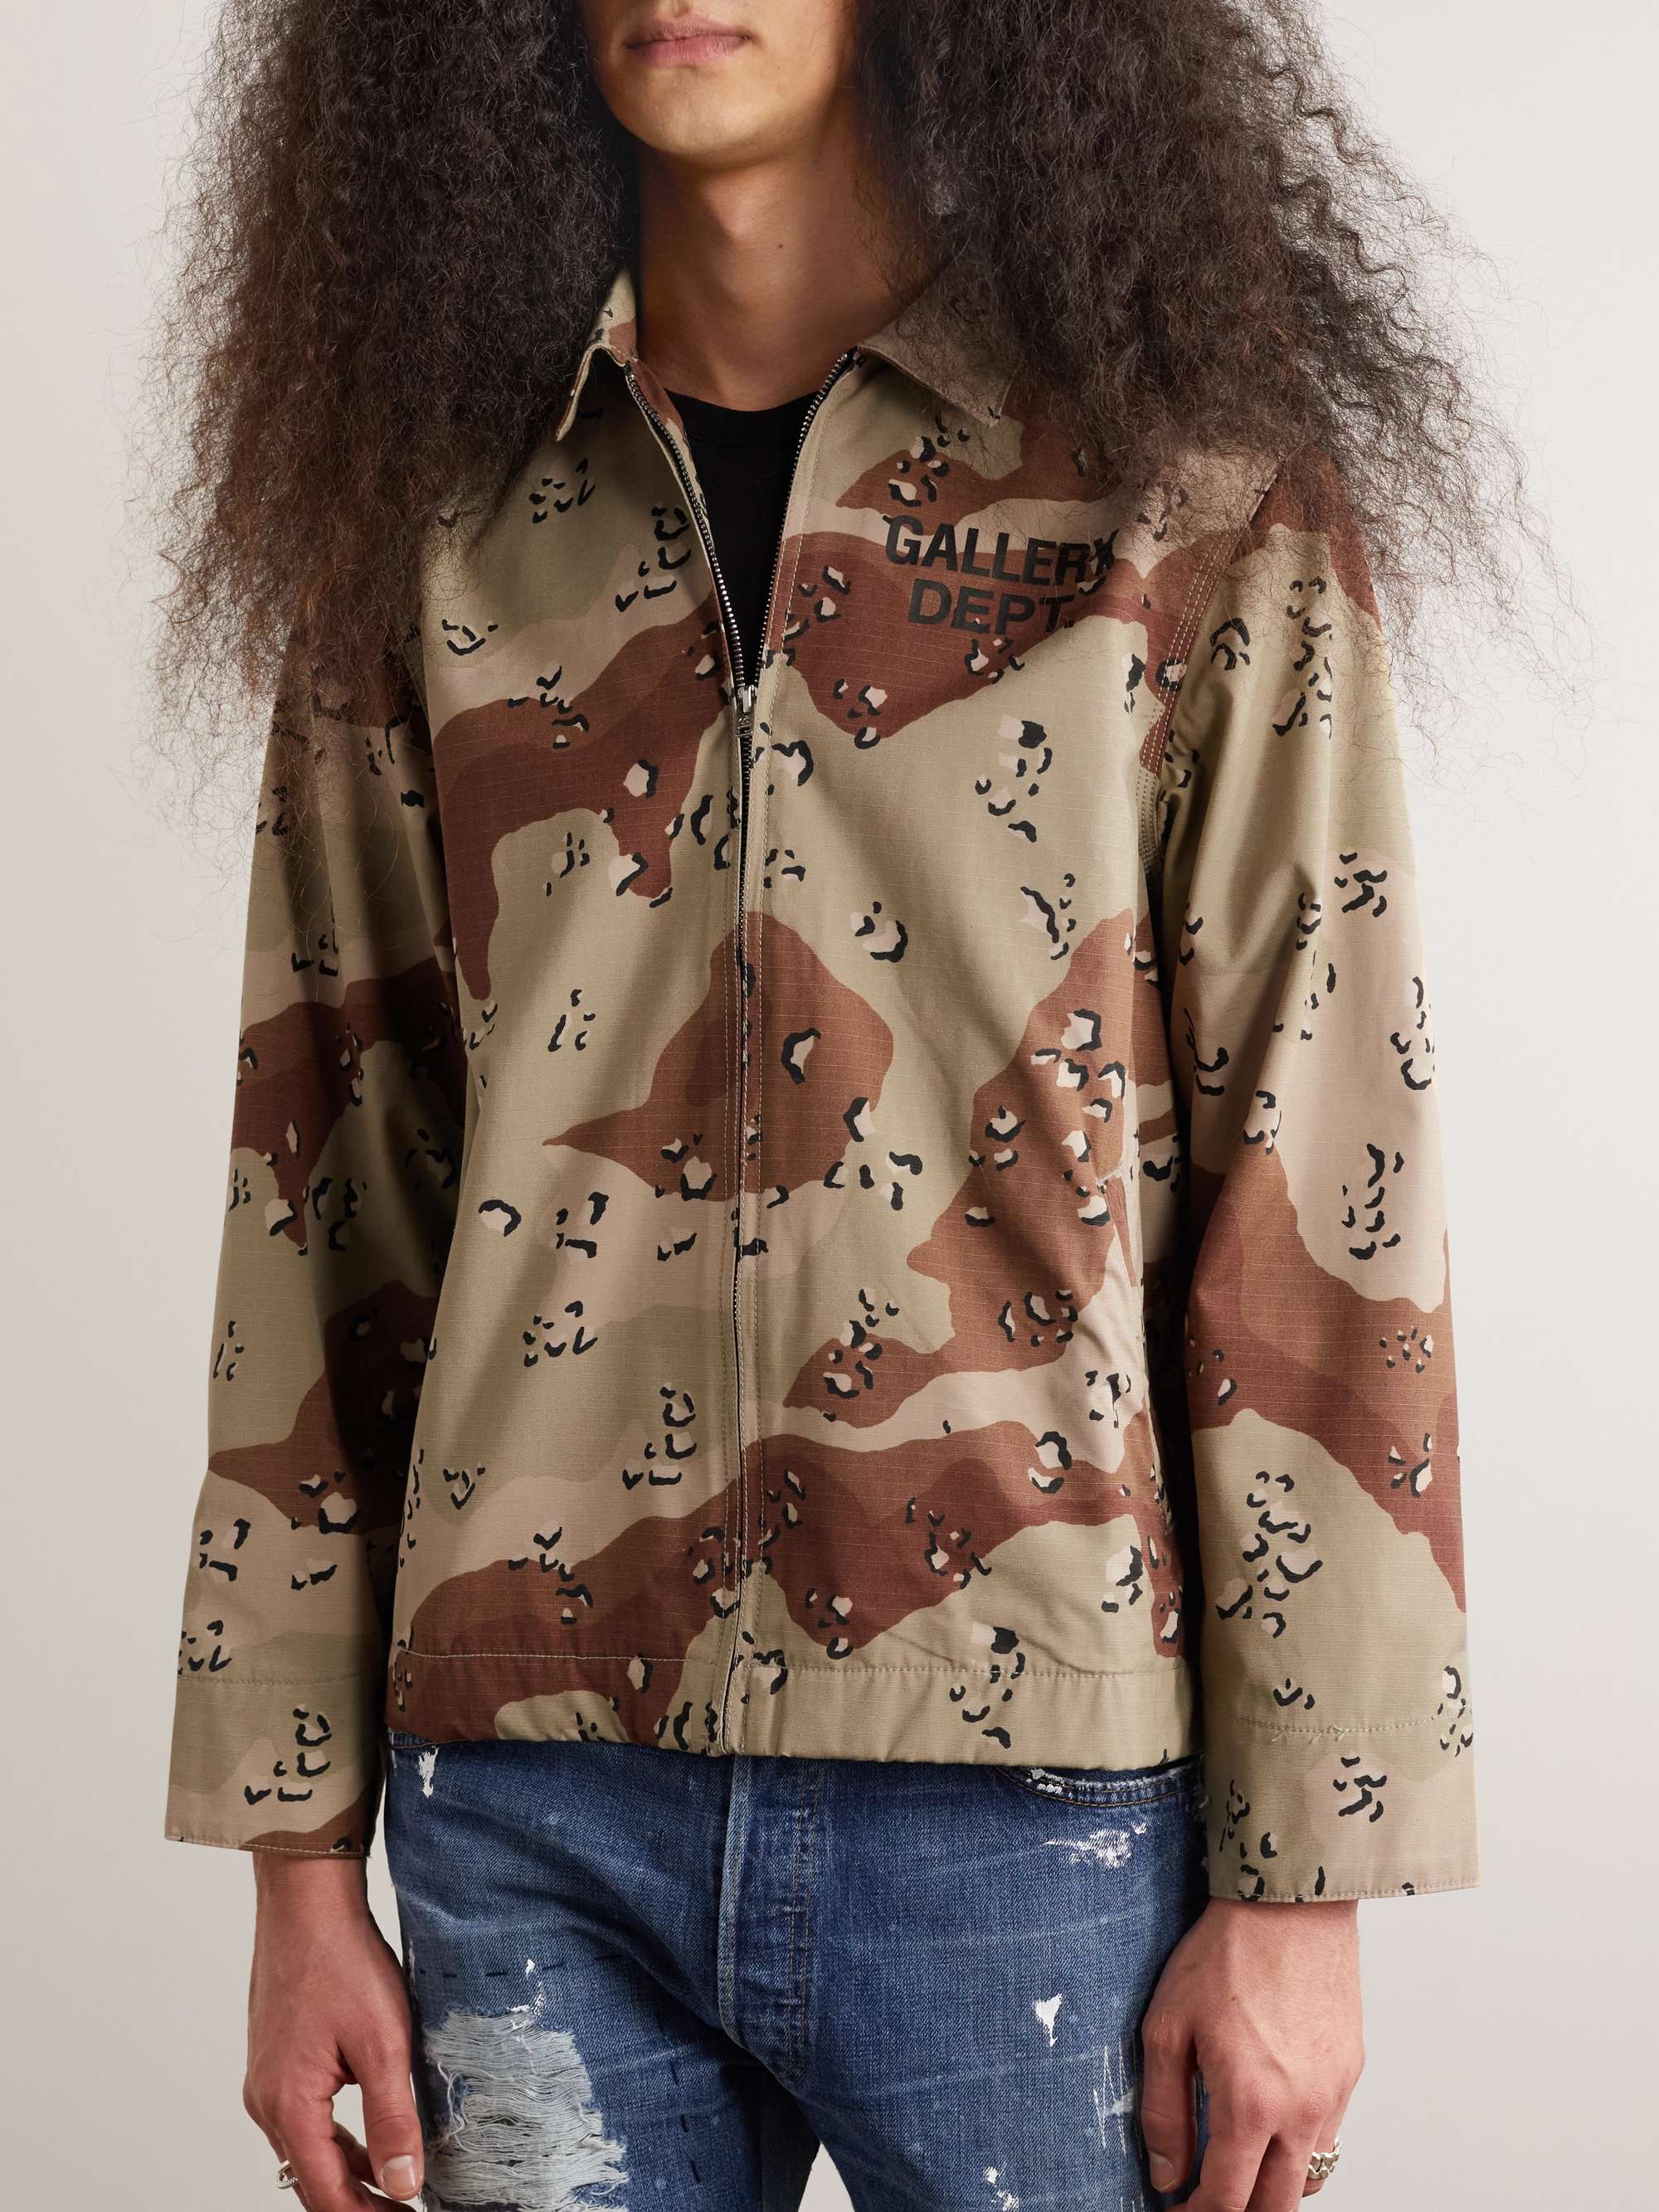 GALLERY DEPT. Montecito Camouflage Logo-Print Cotton-Ripstop Jacket